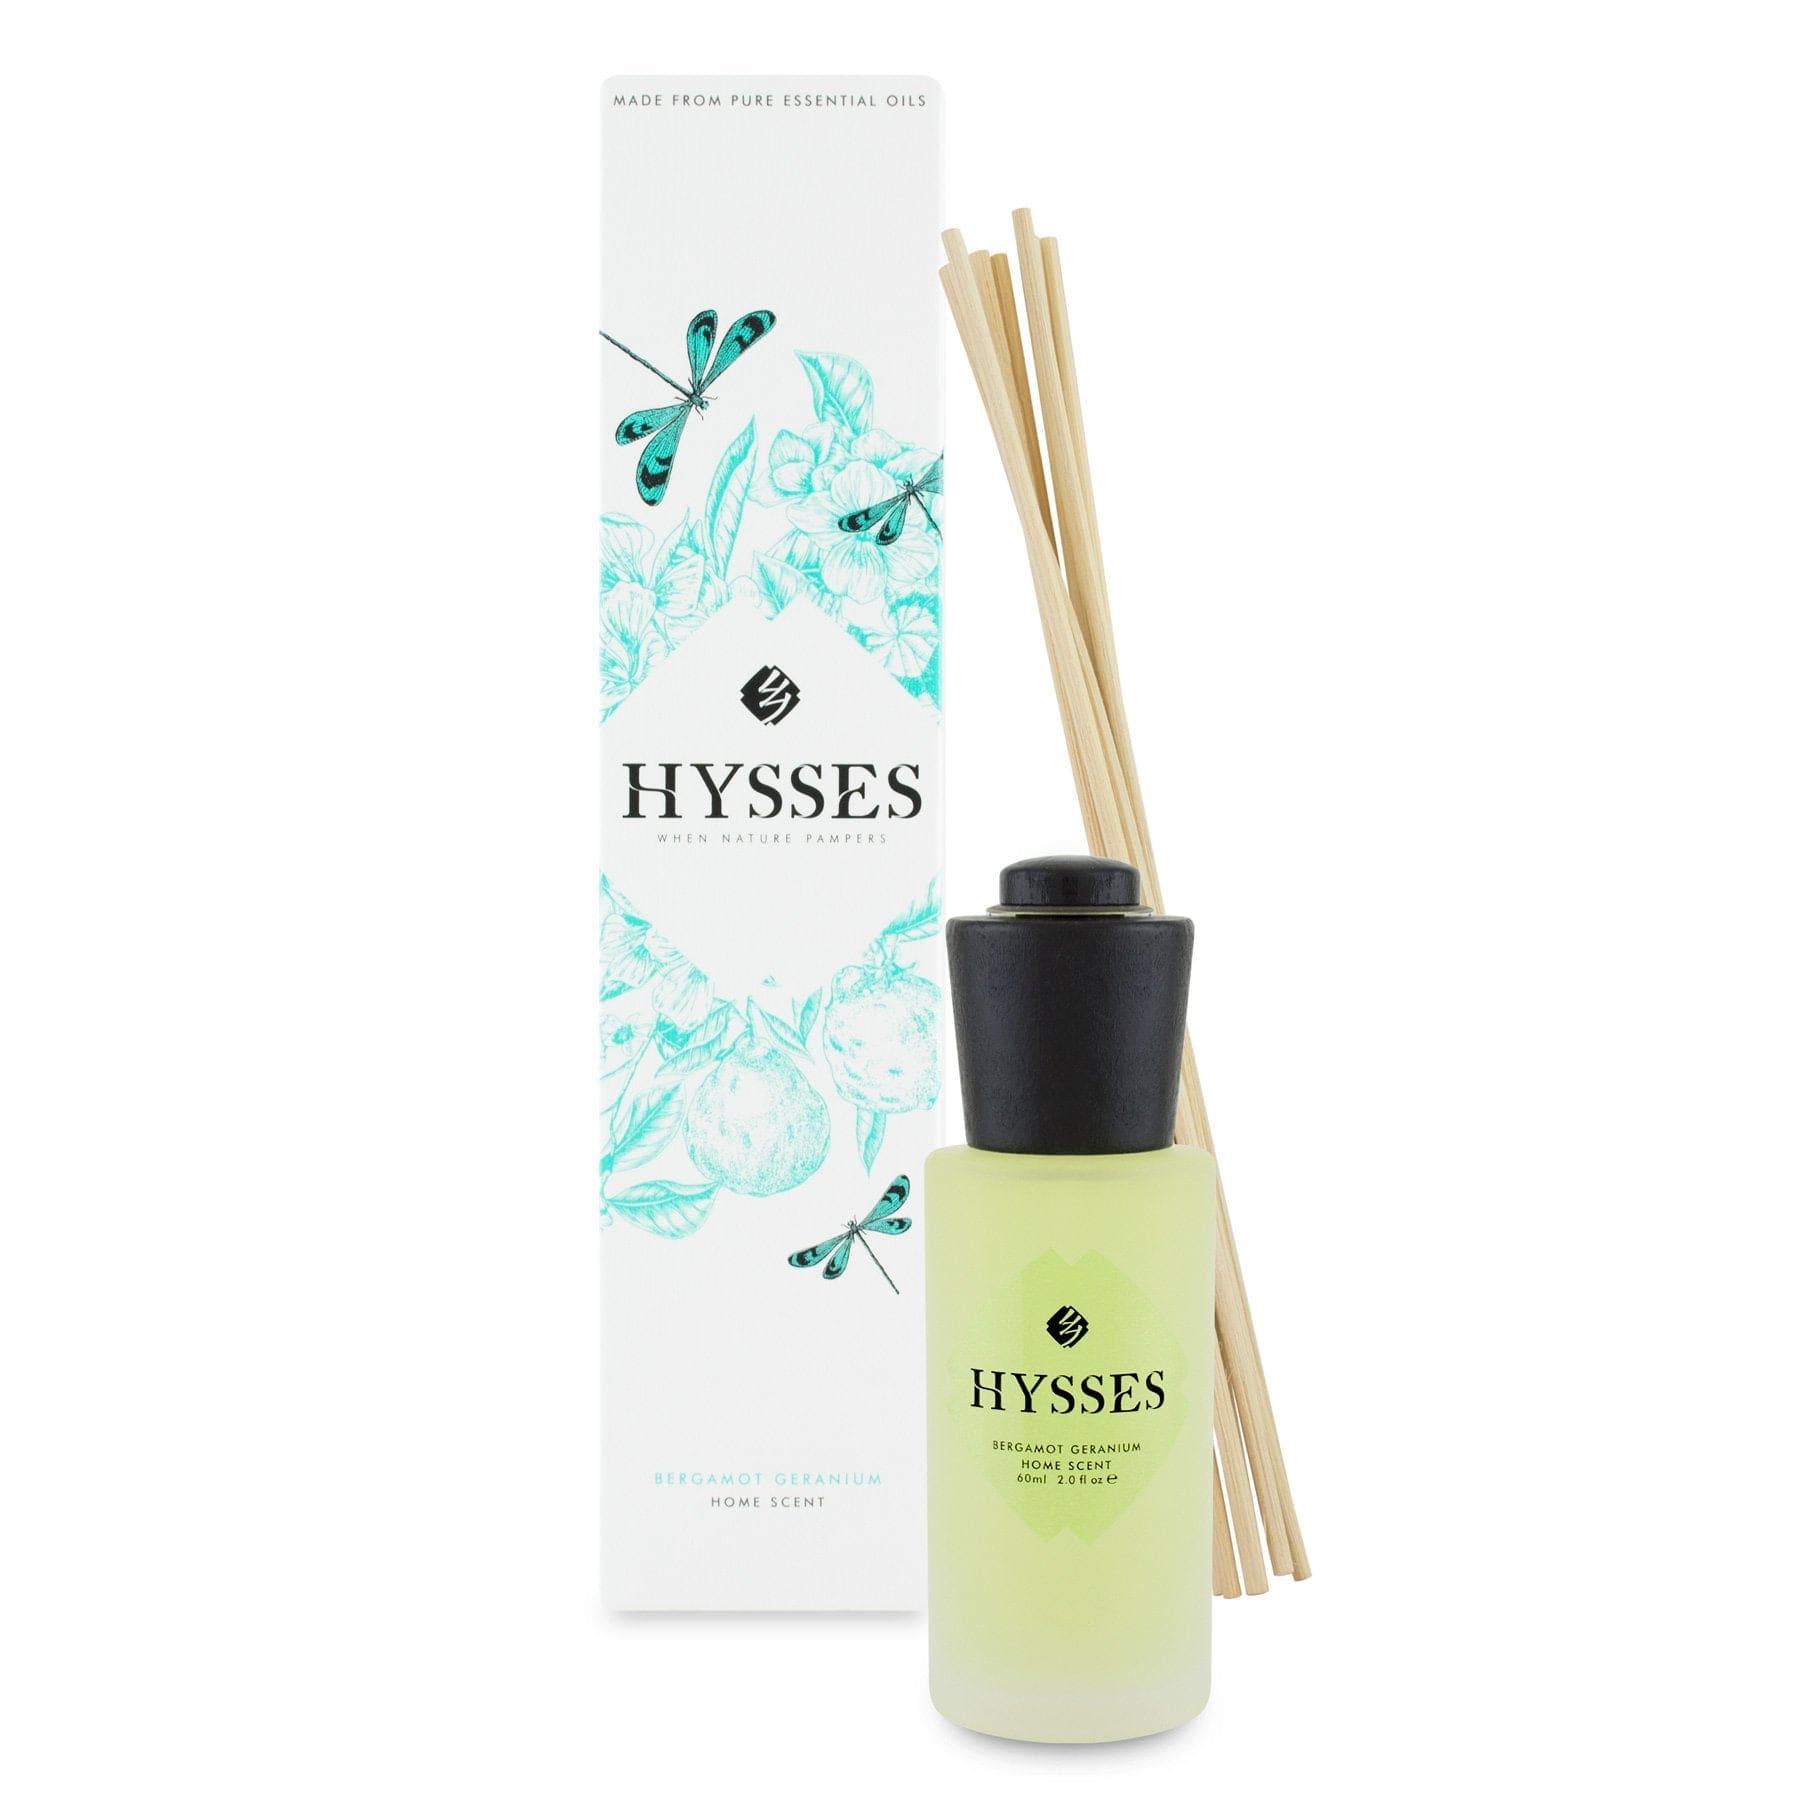 Hysses Home Scents 60ml Home Scent Reed Diffuser Bergamot Geranium, 60ml